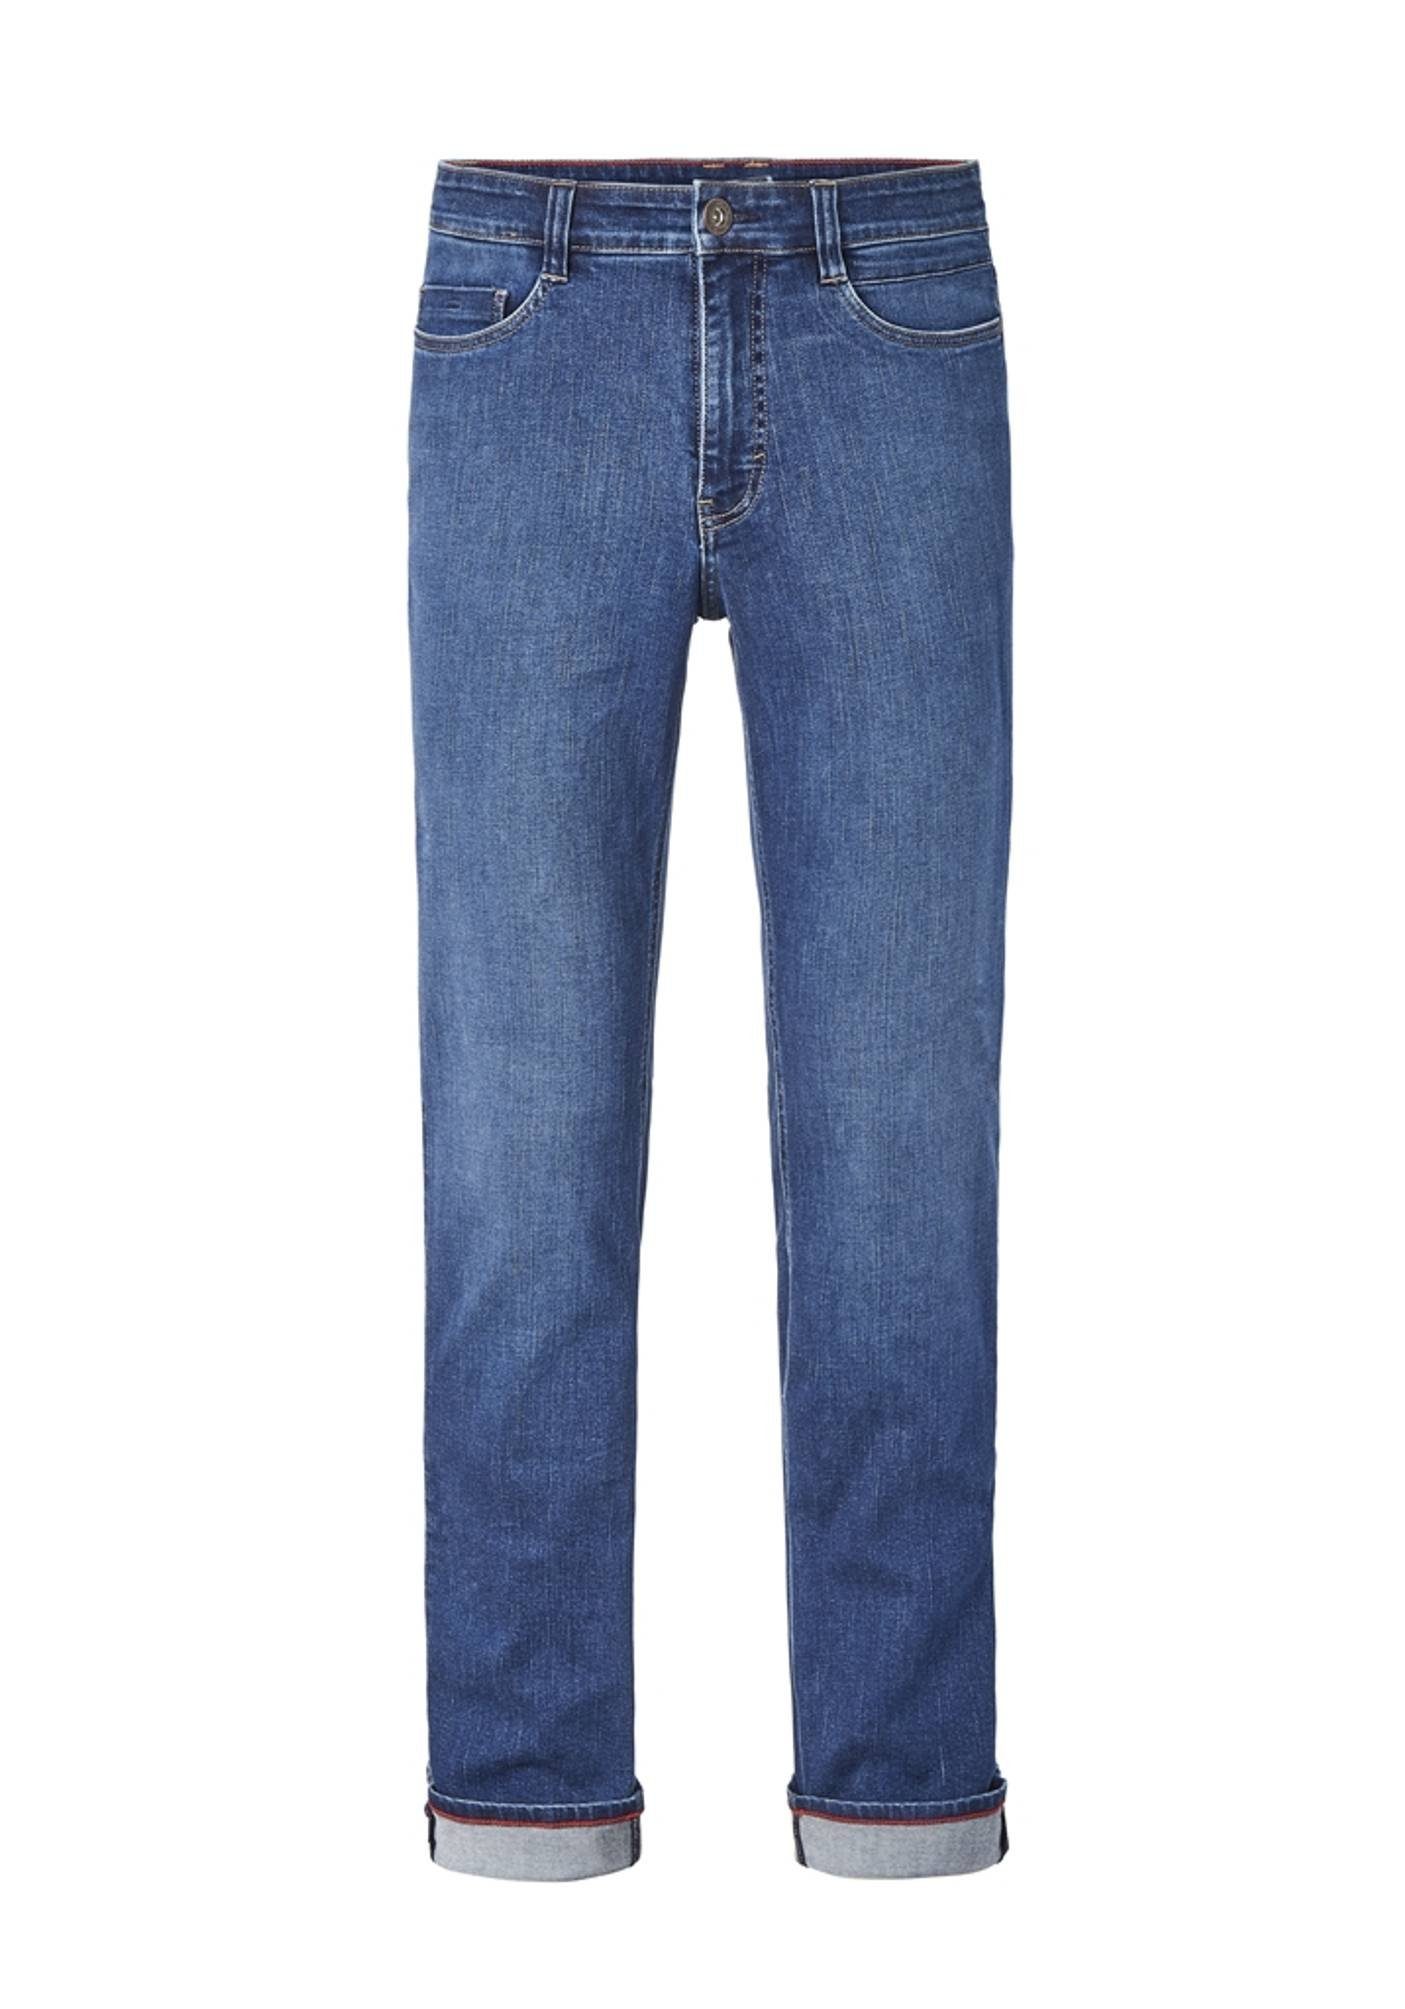 Paddock's 5-Pocket-Jeans Ranger (801412936000) Stretch blue dark stone + soft using(5426) | Straight-Fit Jeans